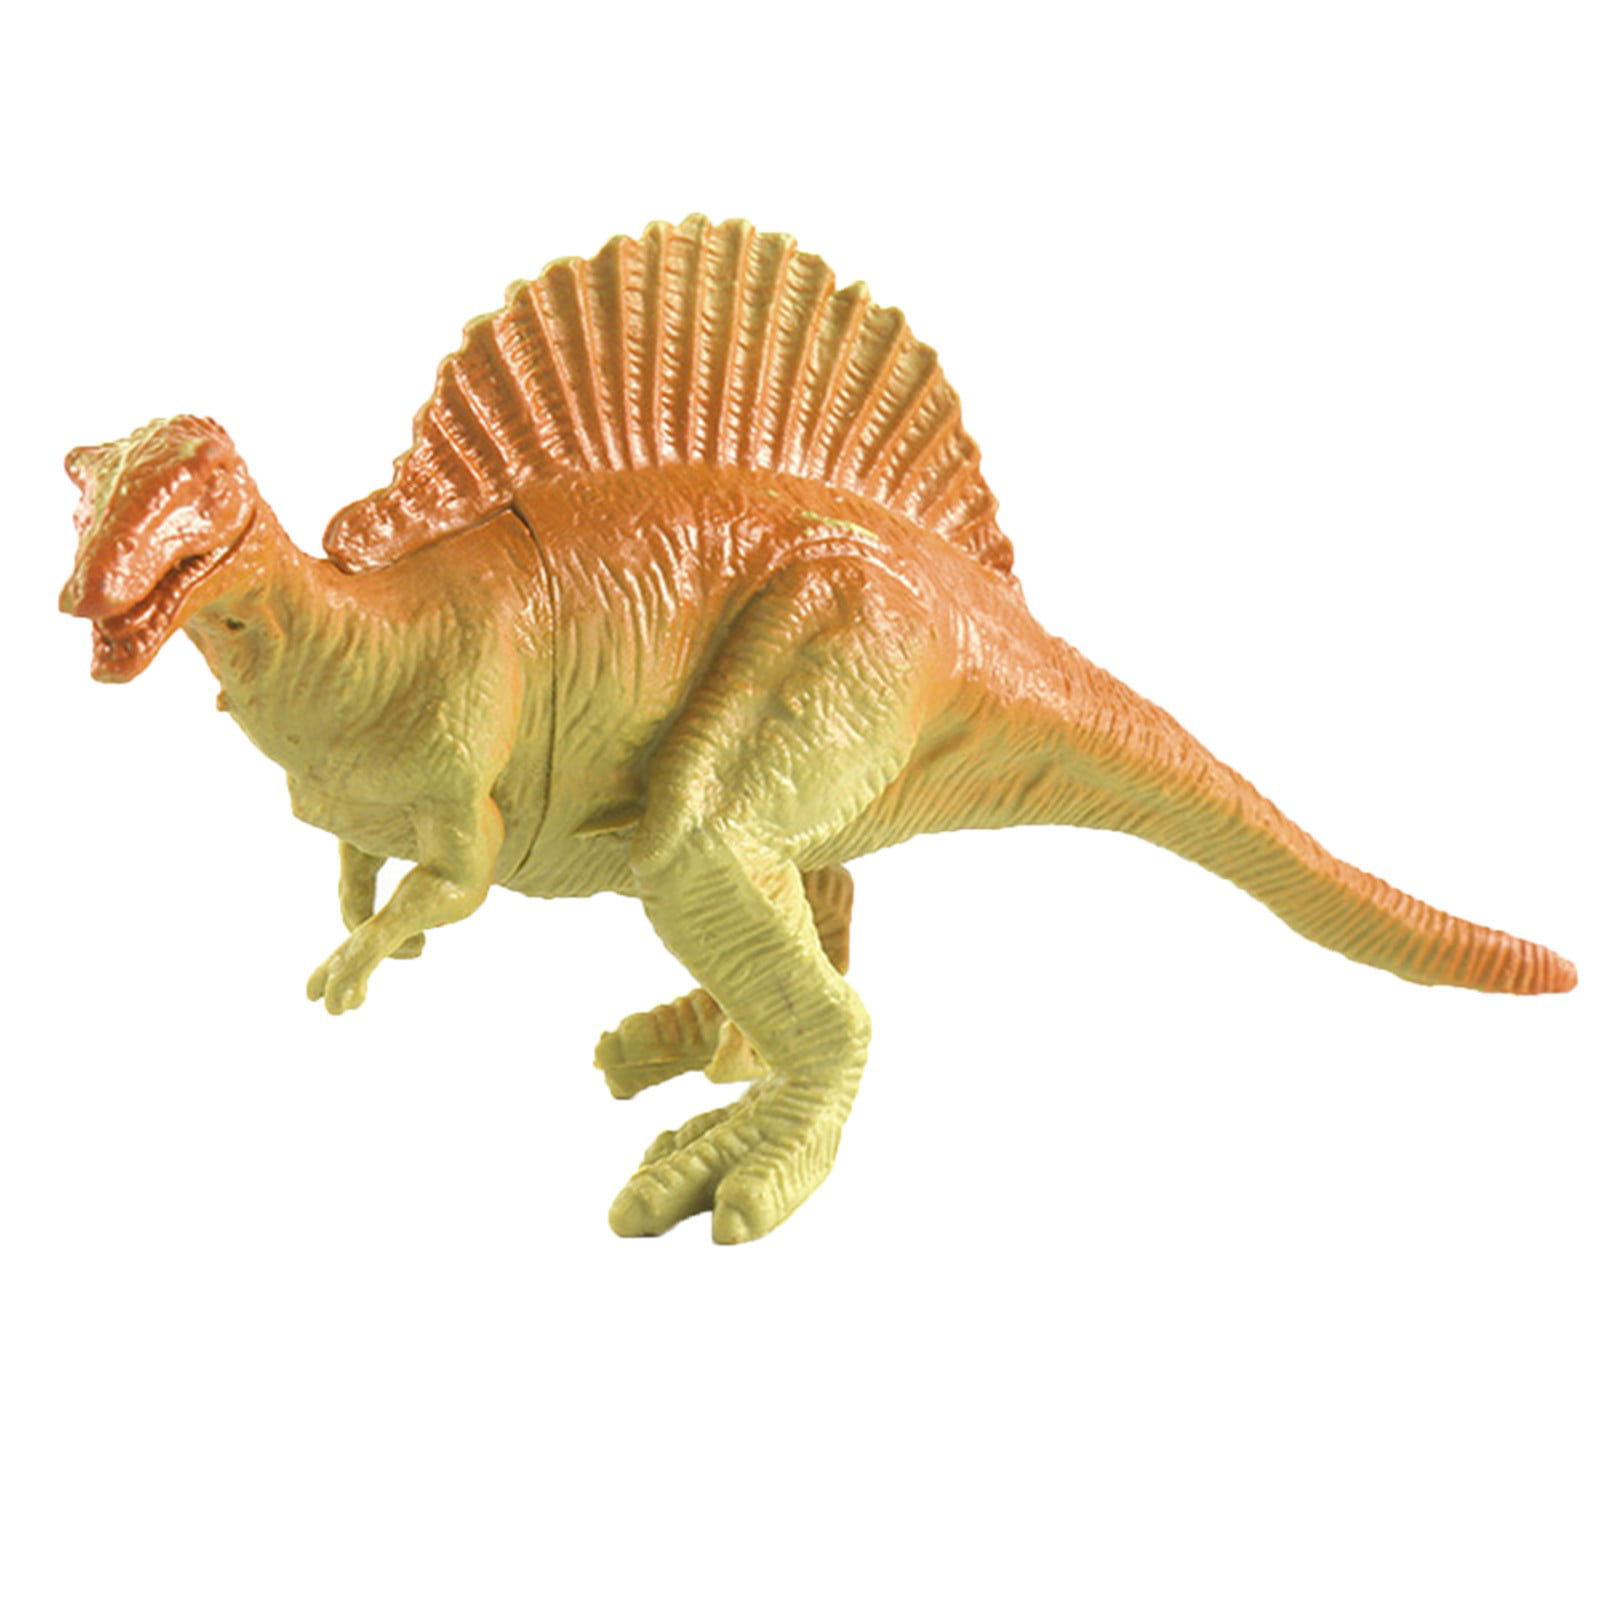 Allosaurus Dinosaur Toy Figure Educational Toy Christmas Gift for Boy Kids 